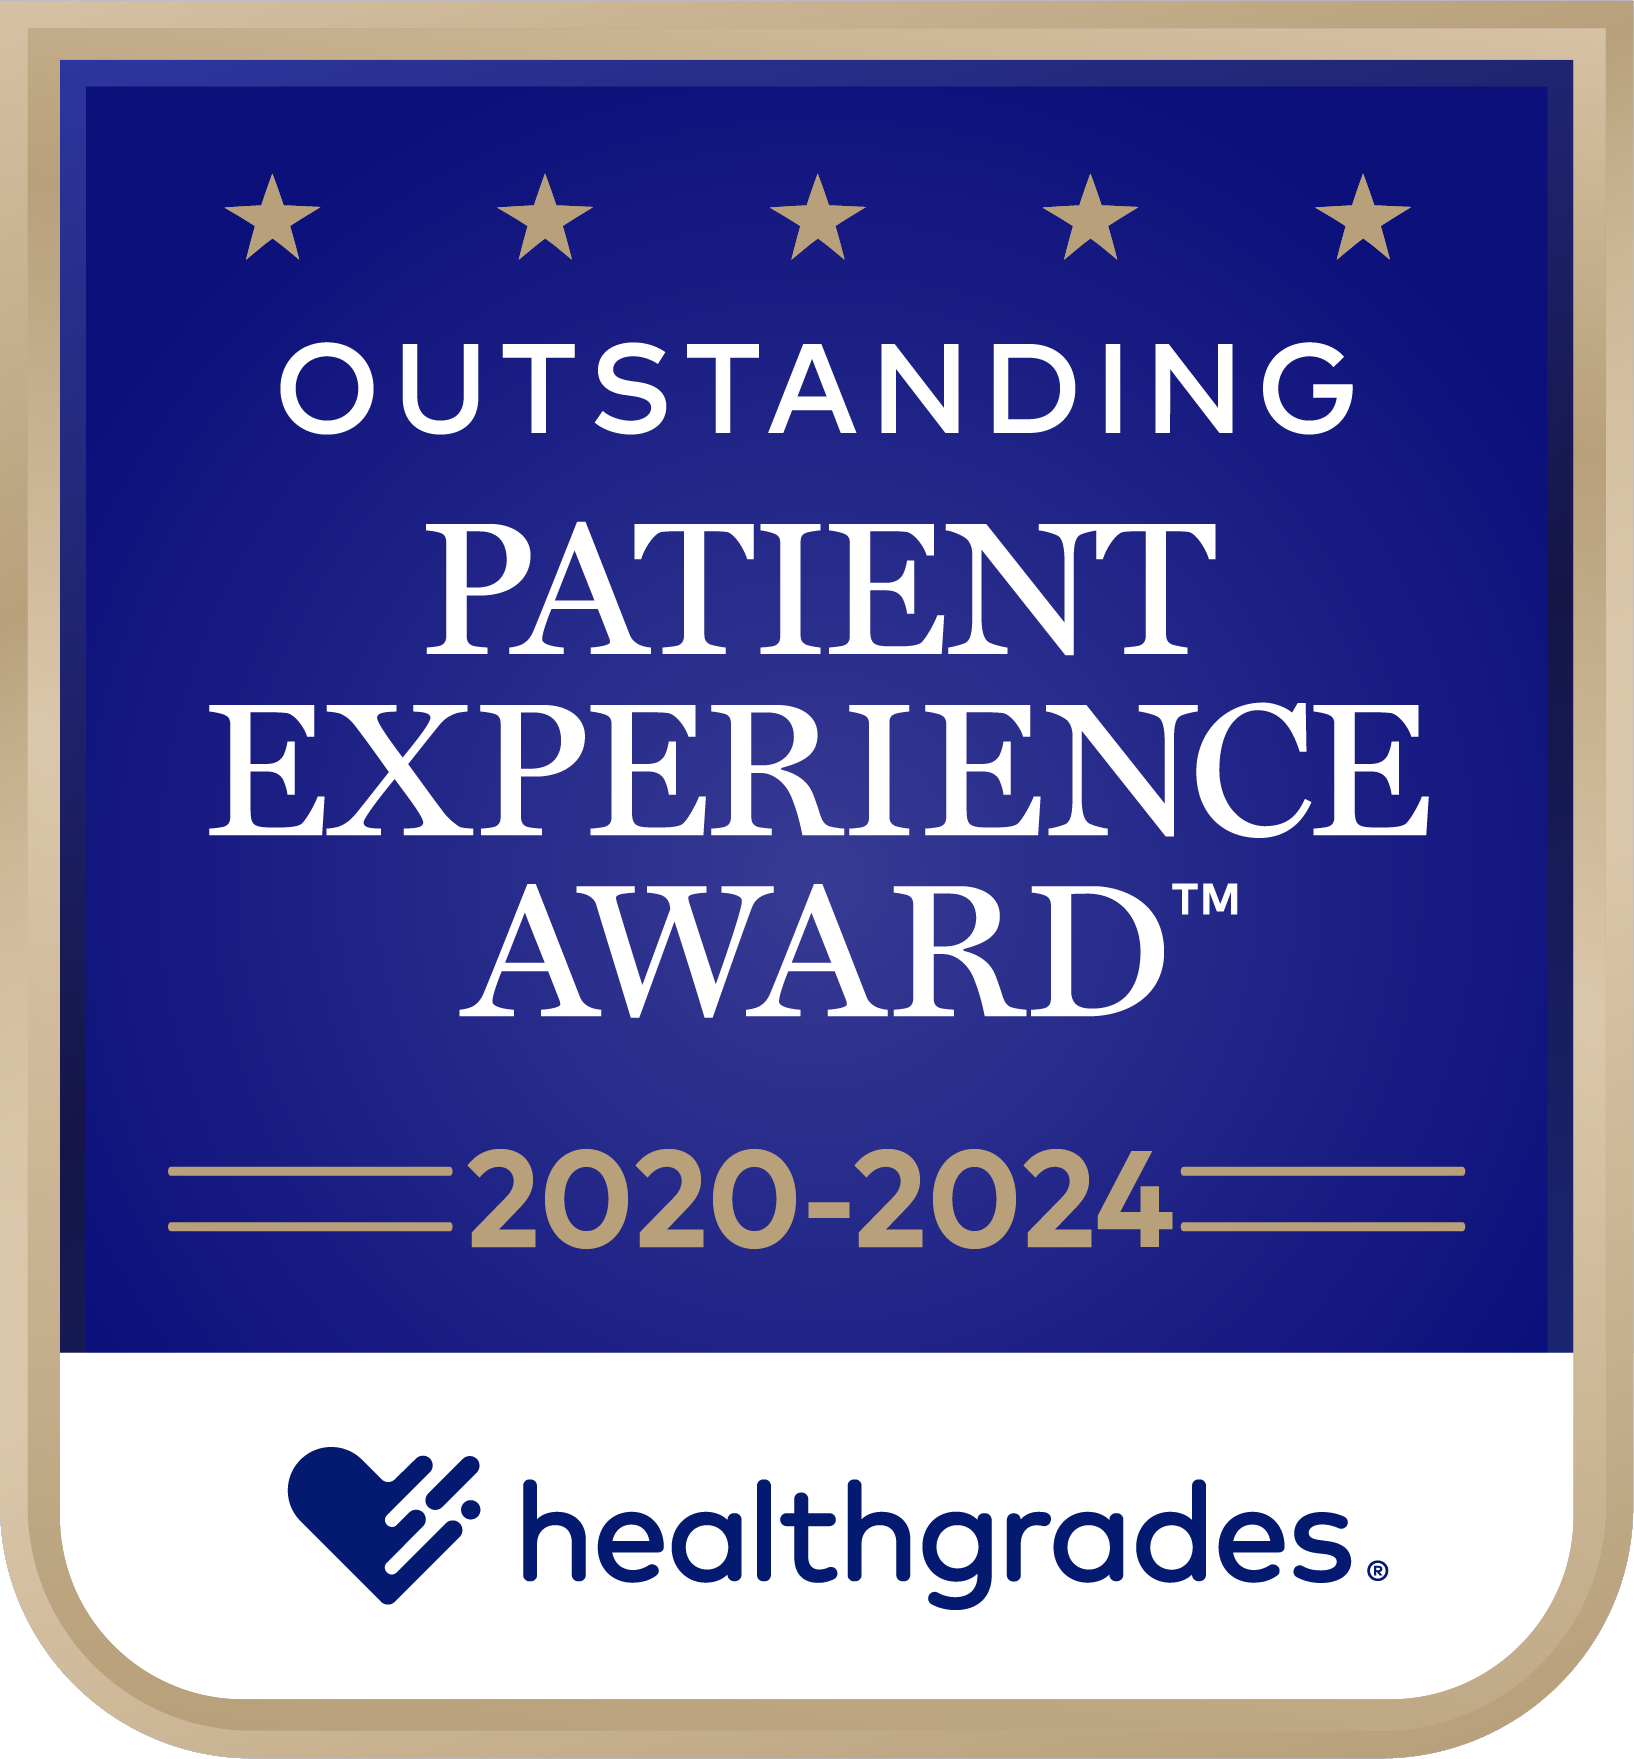 Outstanding Patient Experience Award Recipient 2020-2022